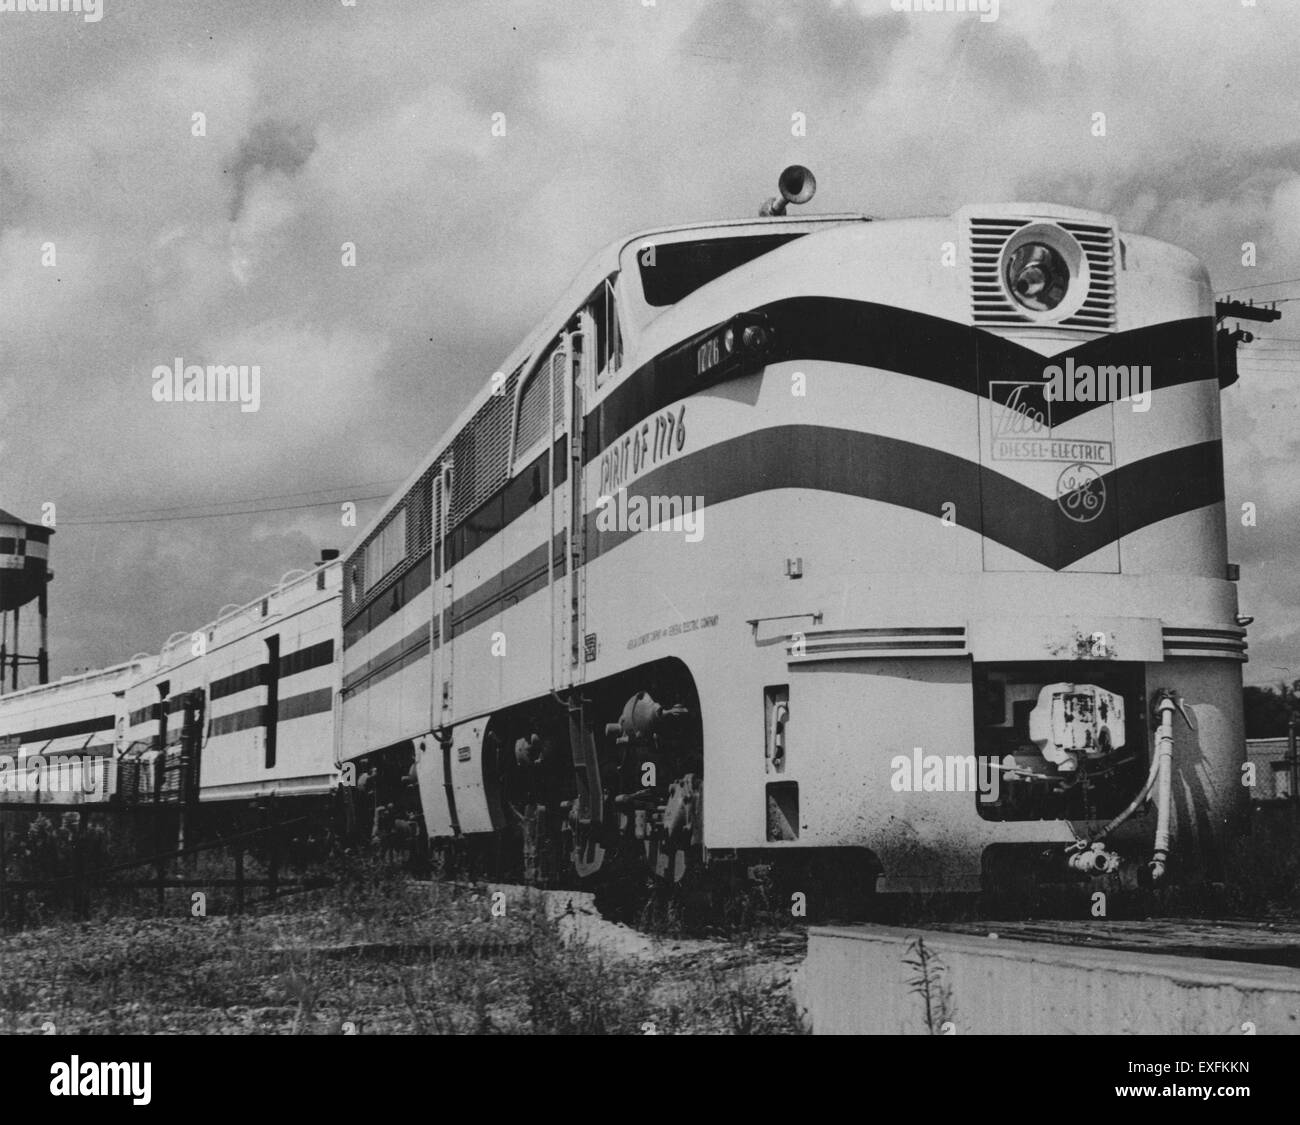 Photograph of Freedom Train Stock Photo - Alamy